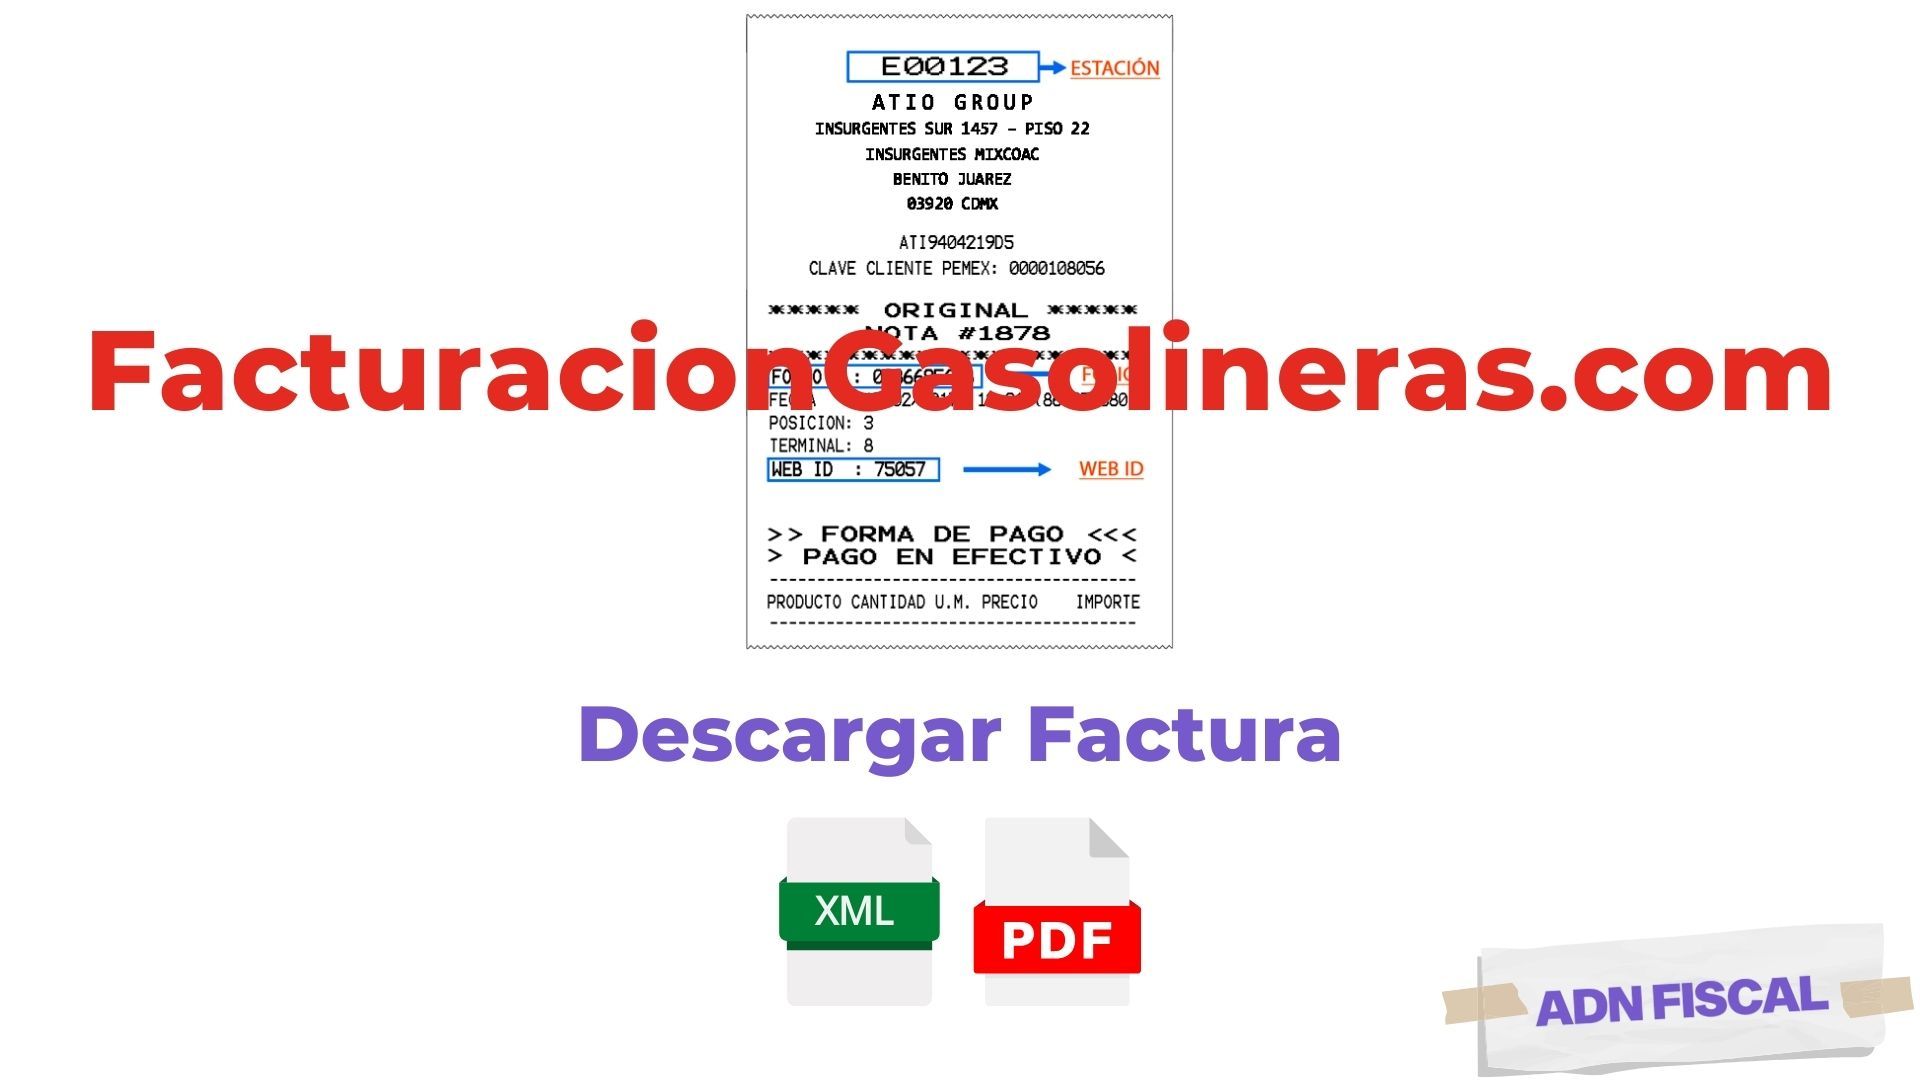 Facturacion FacturacionGasolineras com Facturacion ADN Fiscal